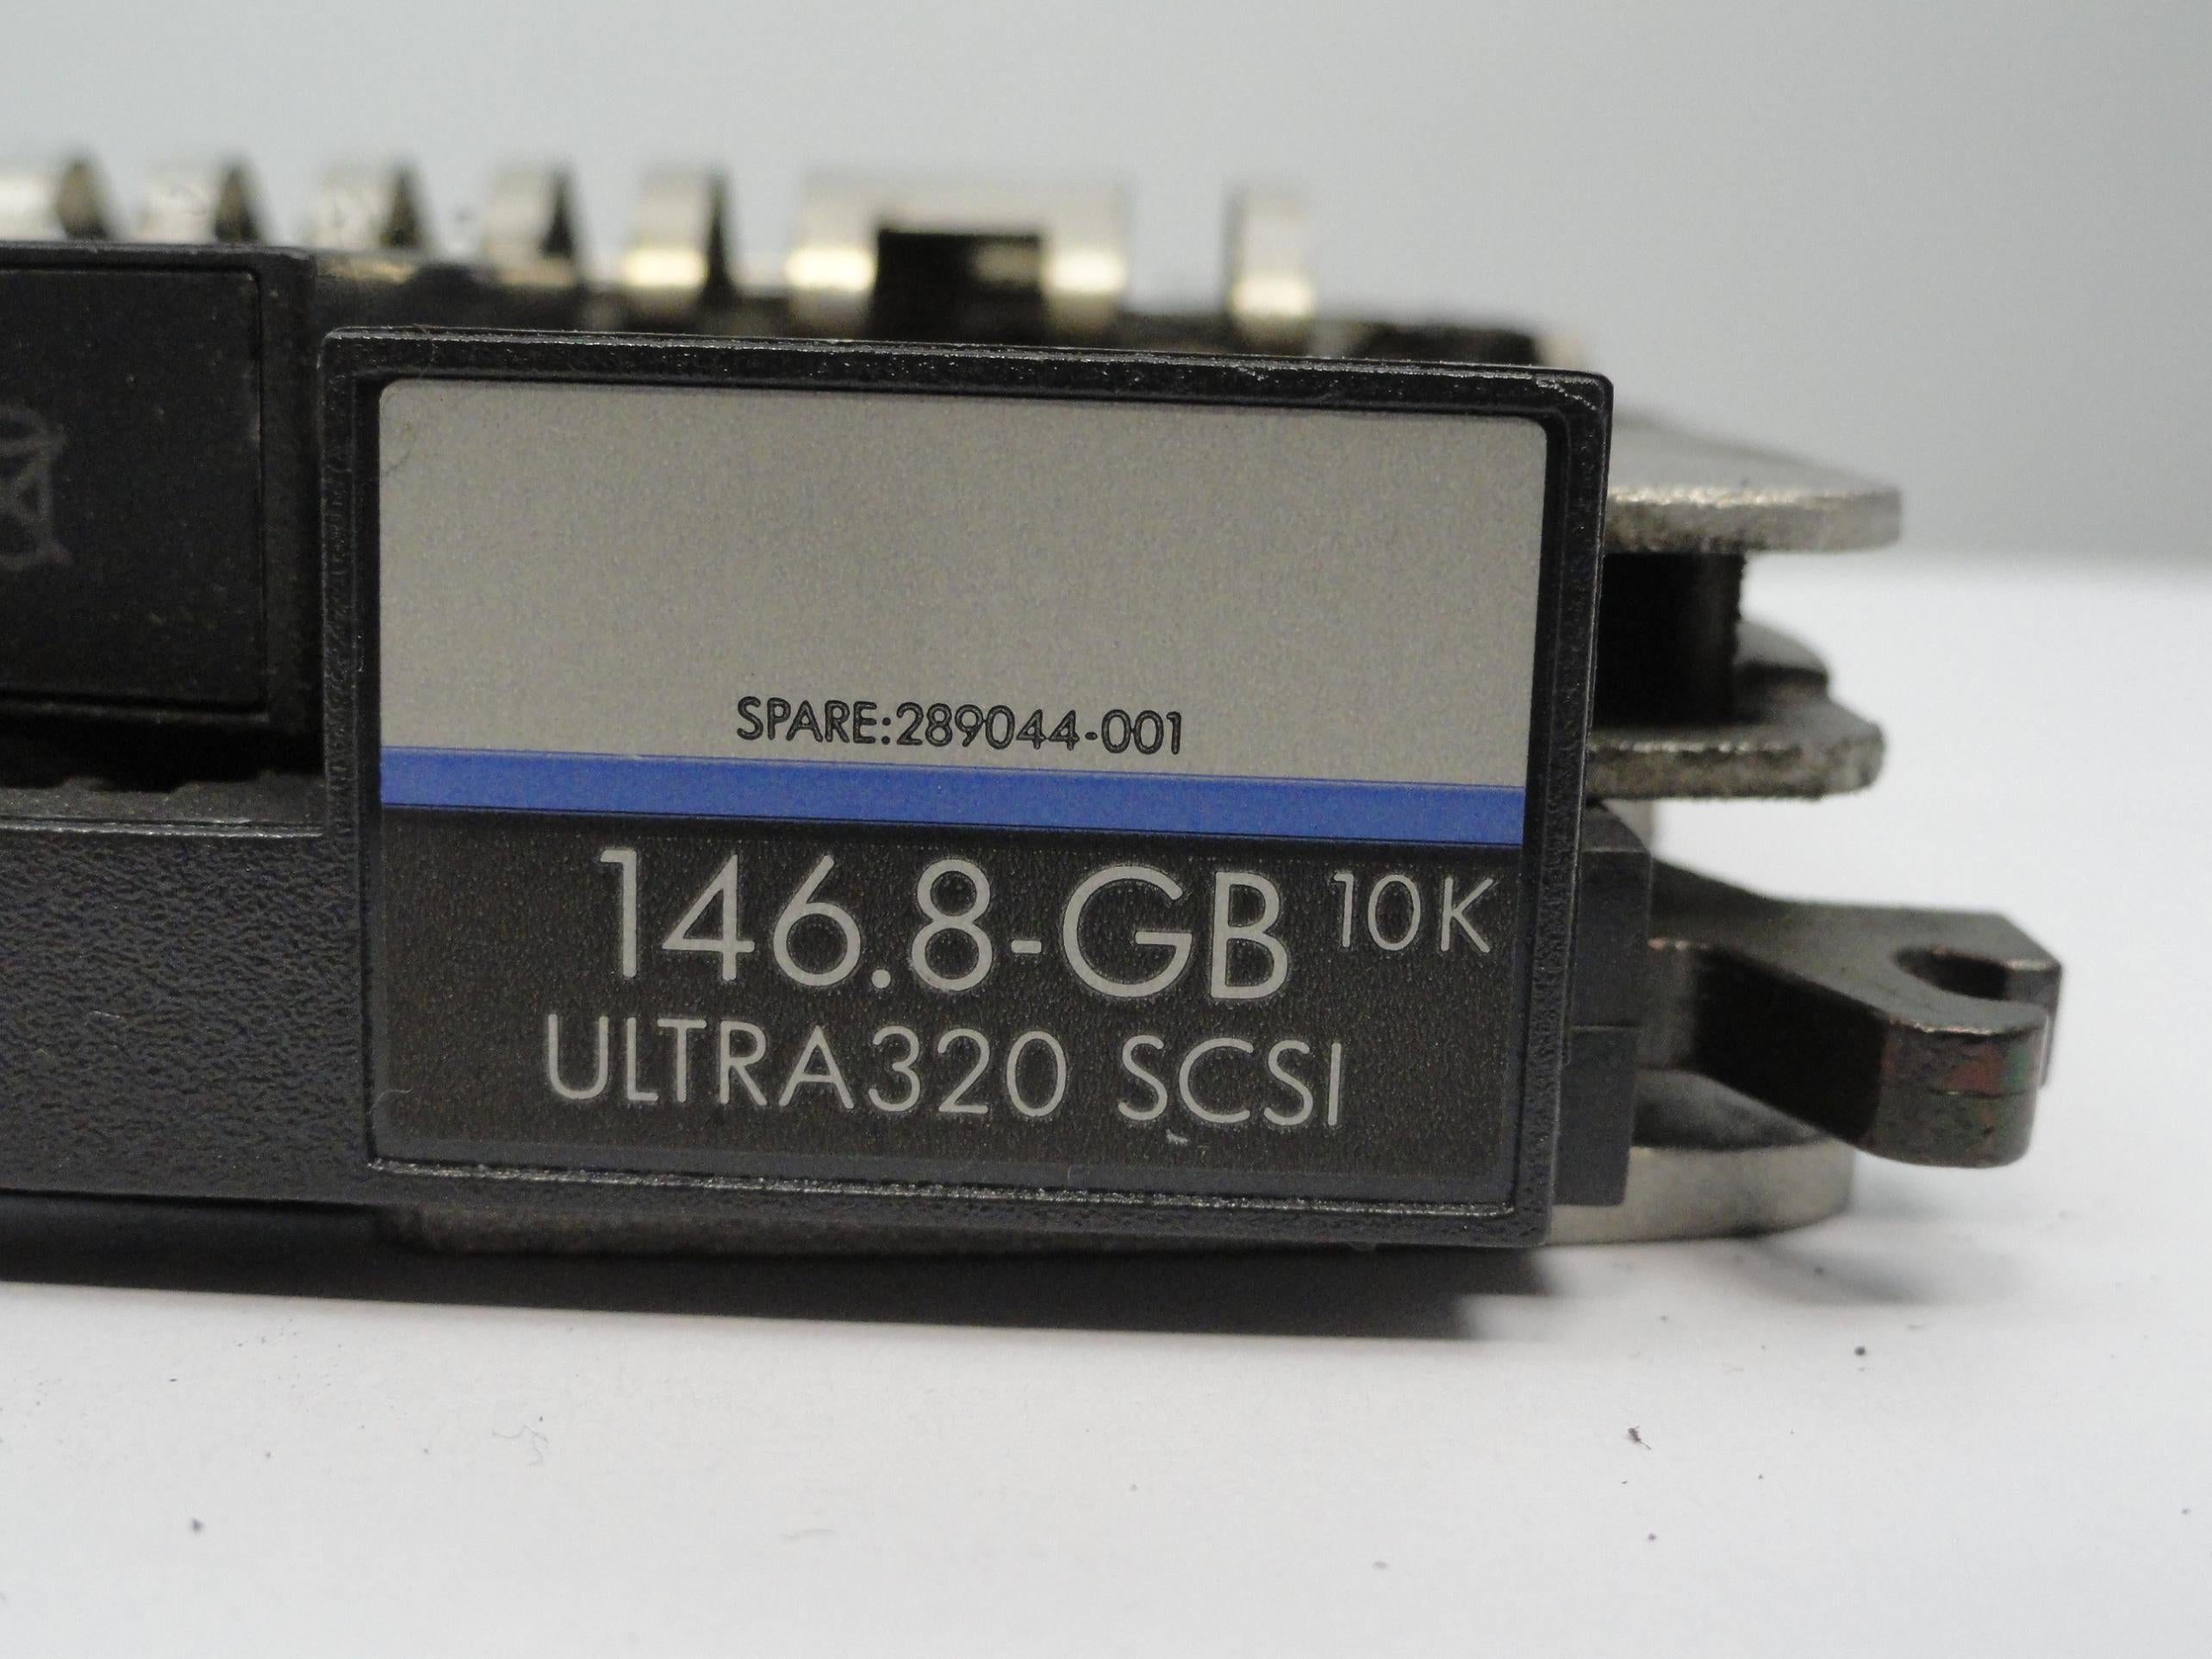 PR22825_9V2006-041_Seagate HP 146.8GB SCSI 80 Pin 10Krpm 3.5in HDD - Image3